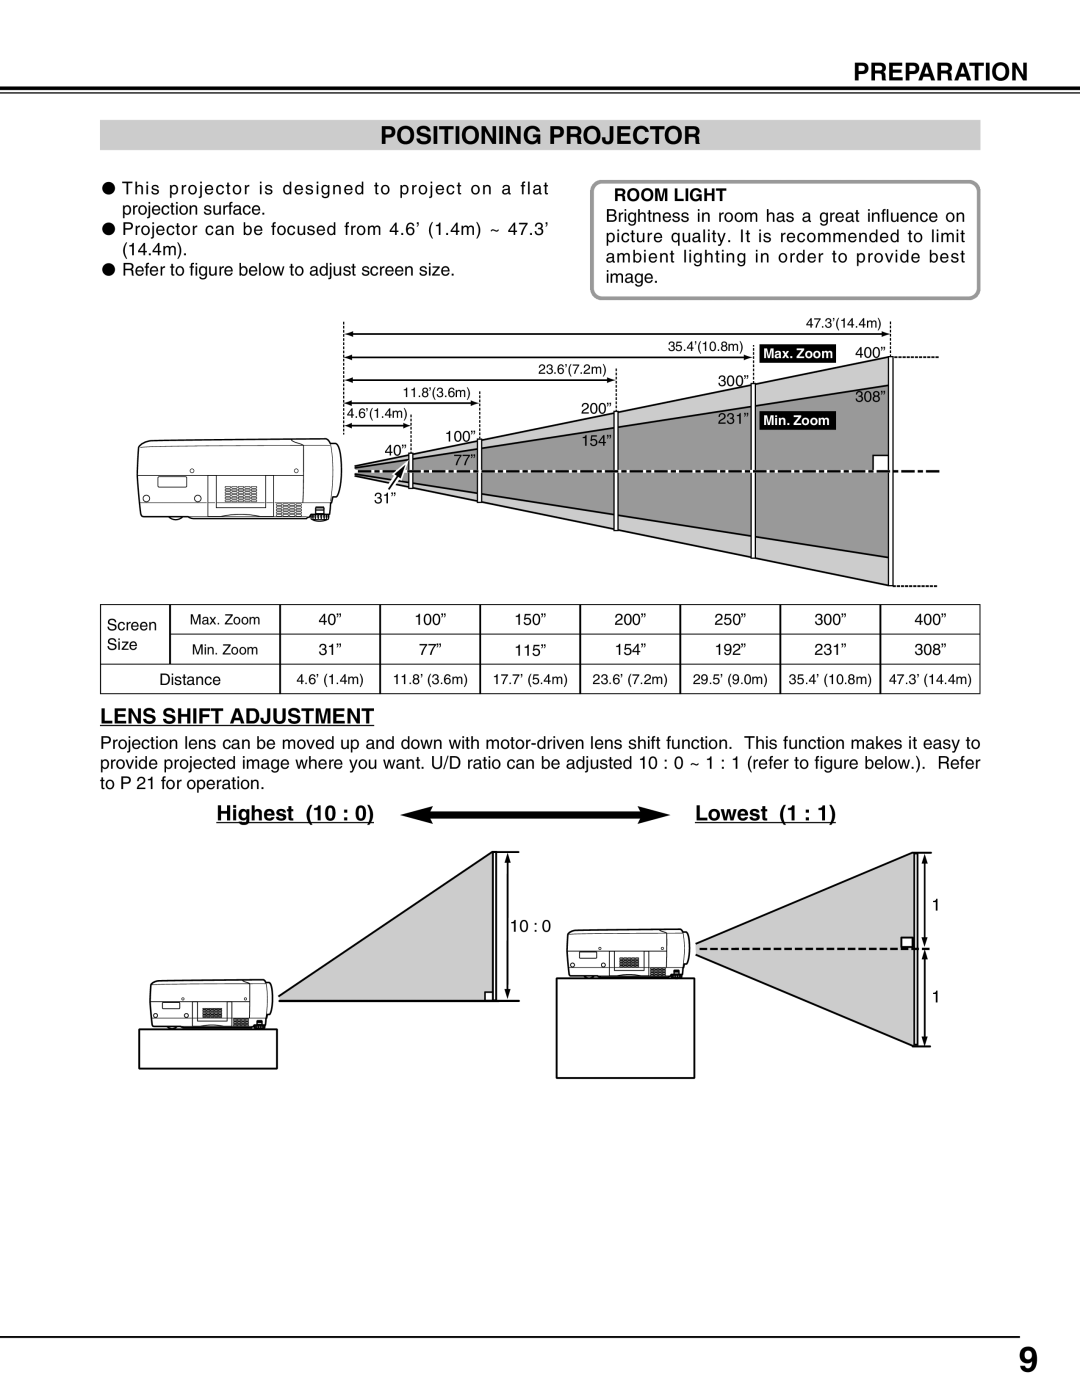 Eiki LC-X60 instruction manual Preparation Positioning Projector, Lens Shift Adjustment, Highest, Lowest 